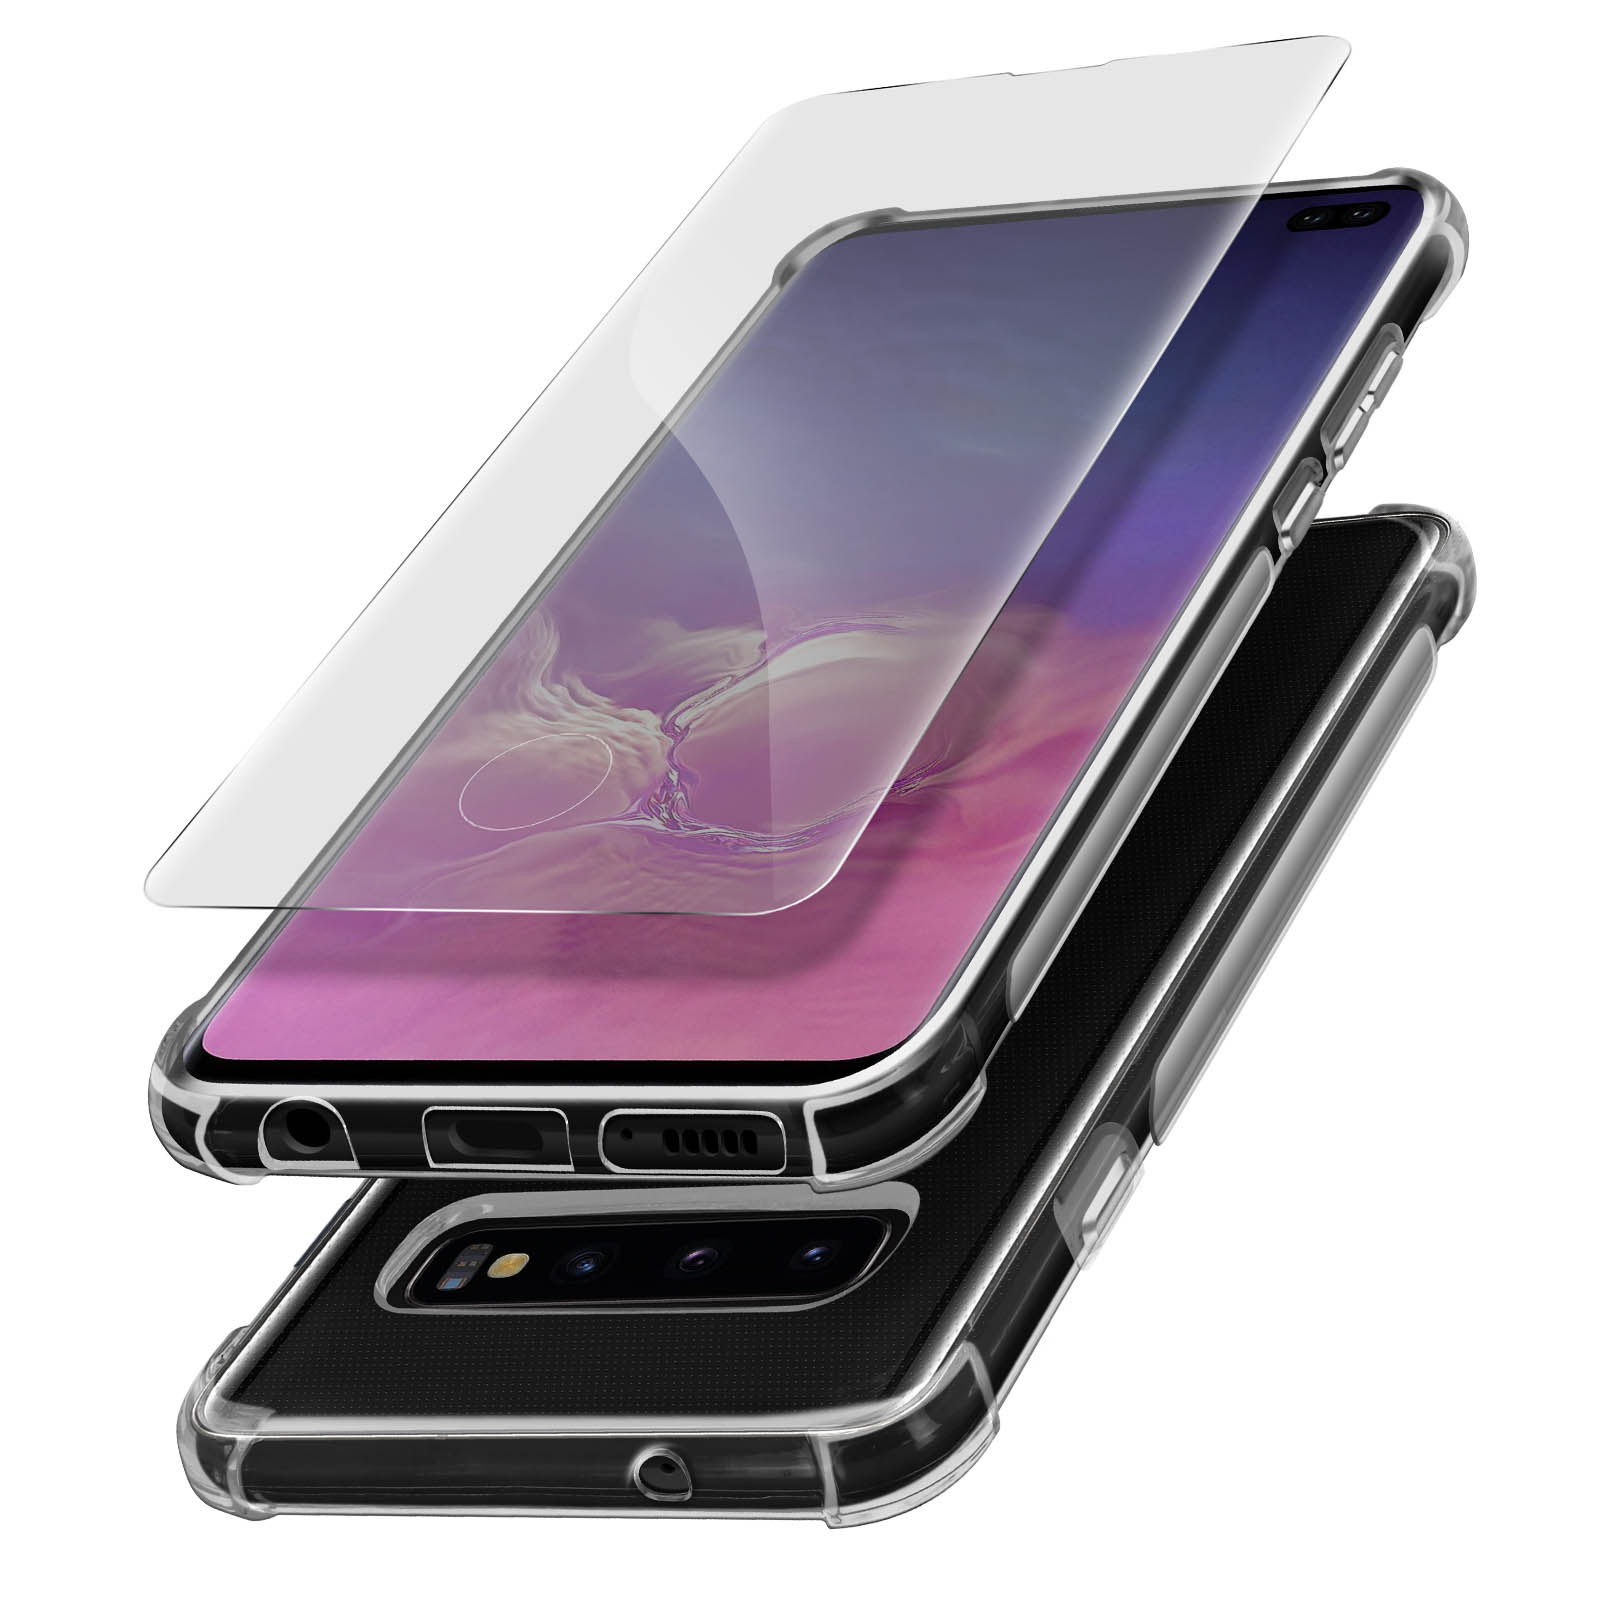 Backcover, Series, Transparent Plus, S10 AVIZAR Galaxy Samsung, Prems